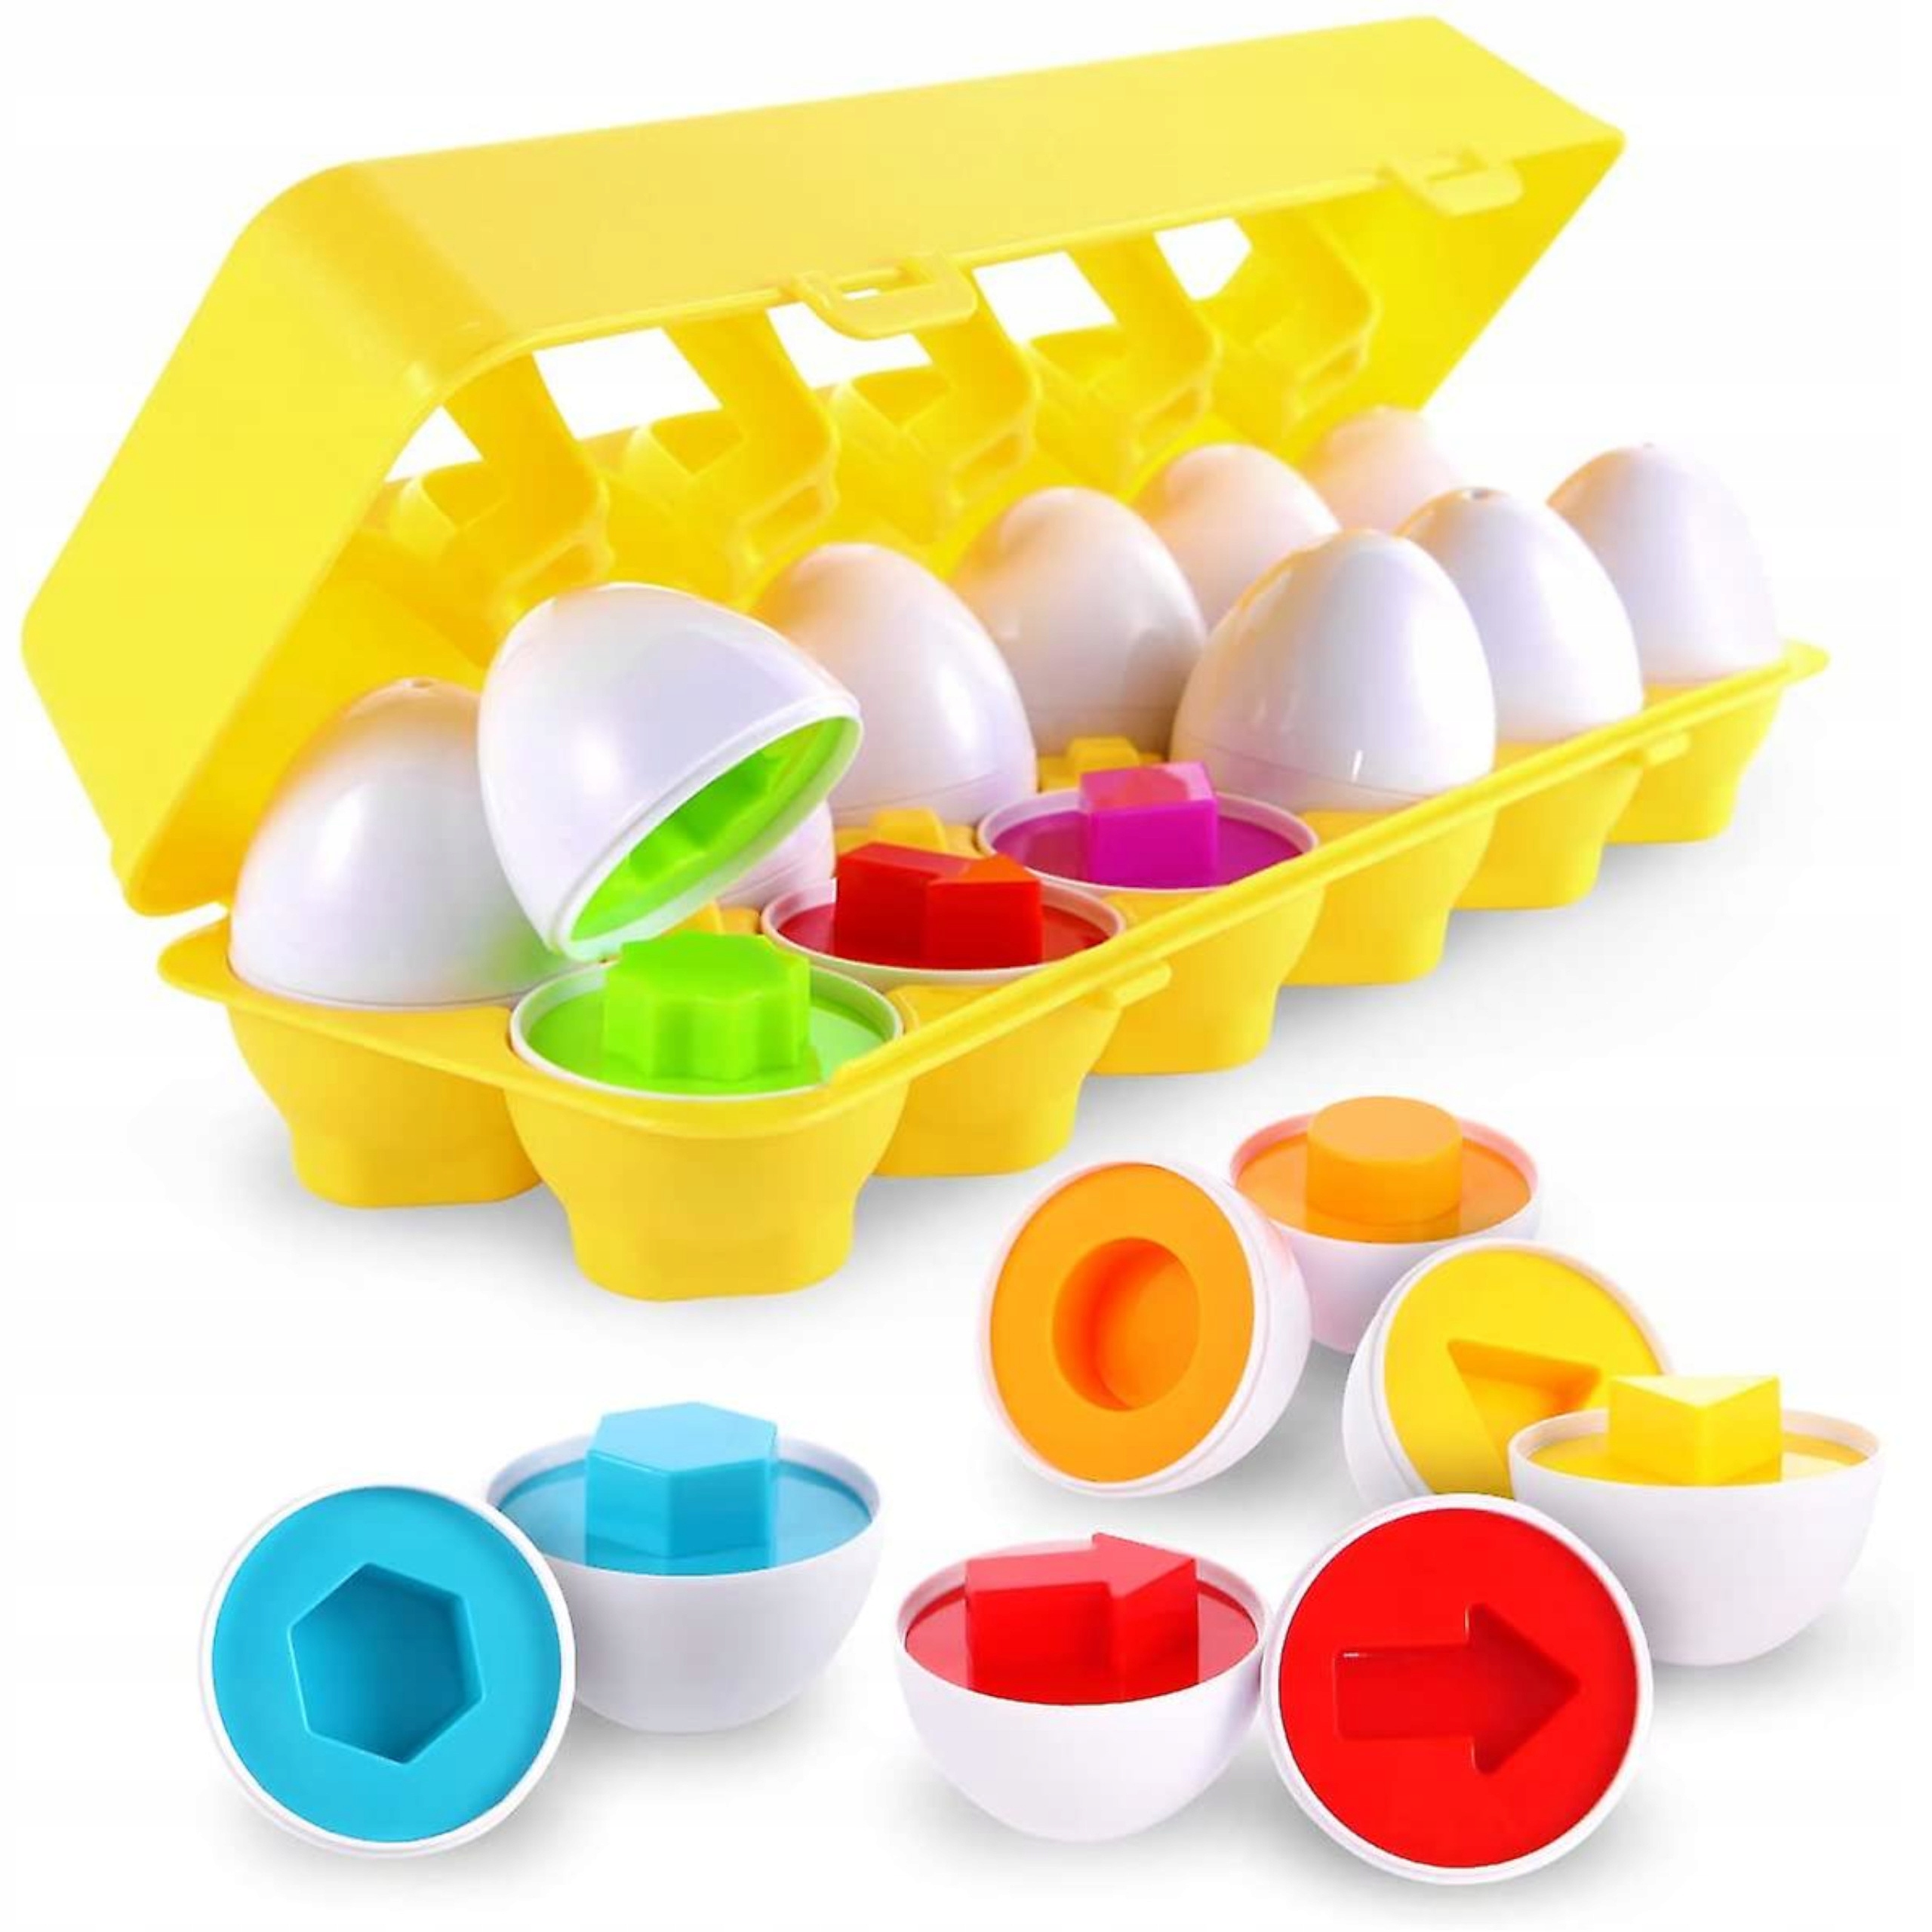 Układanka sorter jajka Montessori kształty LB33-3 Bohater brak